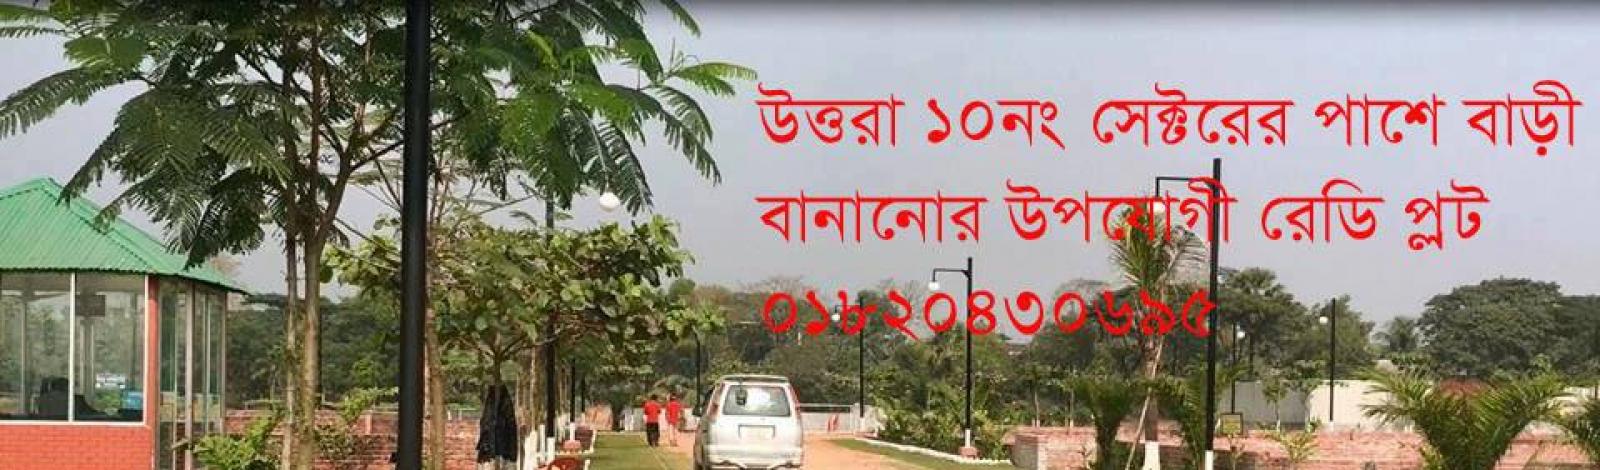 Uttara Probortan City banner